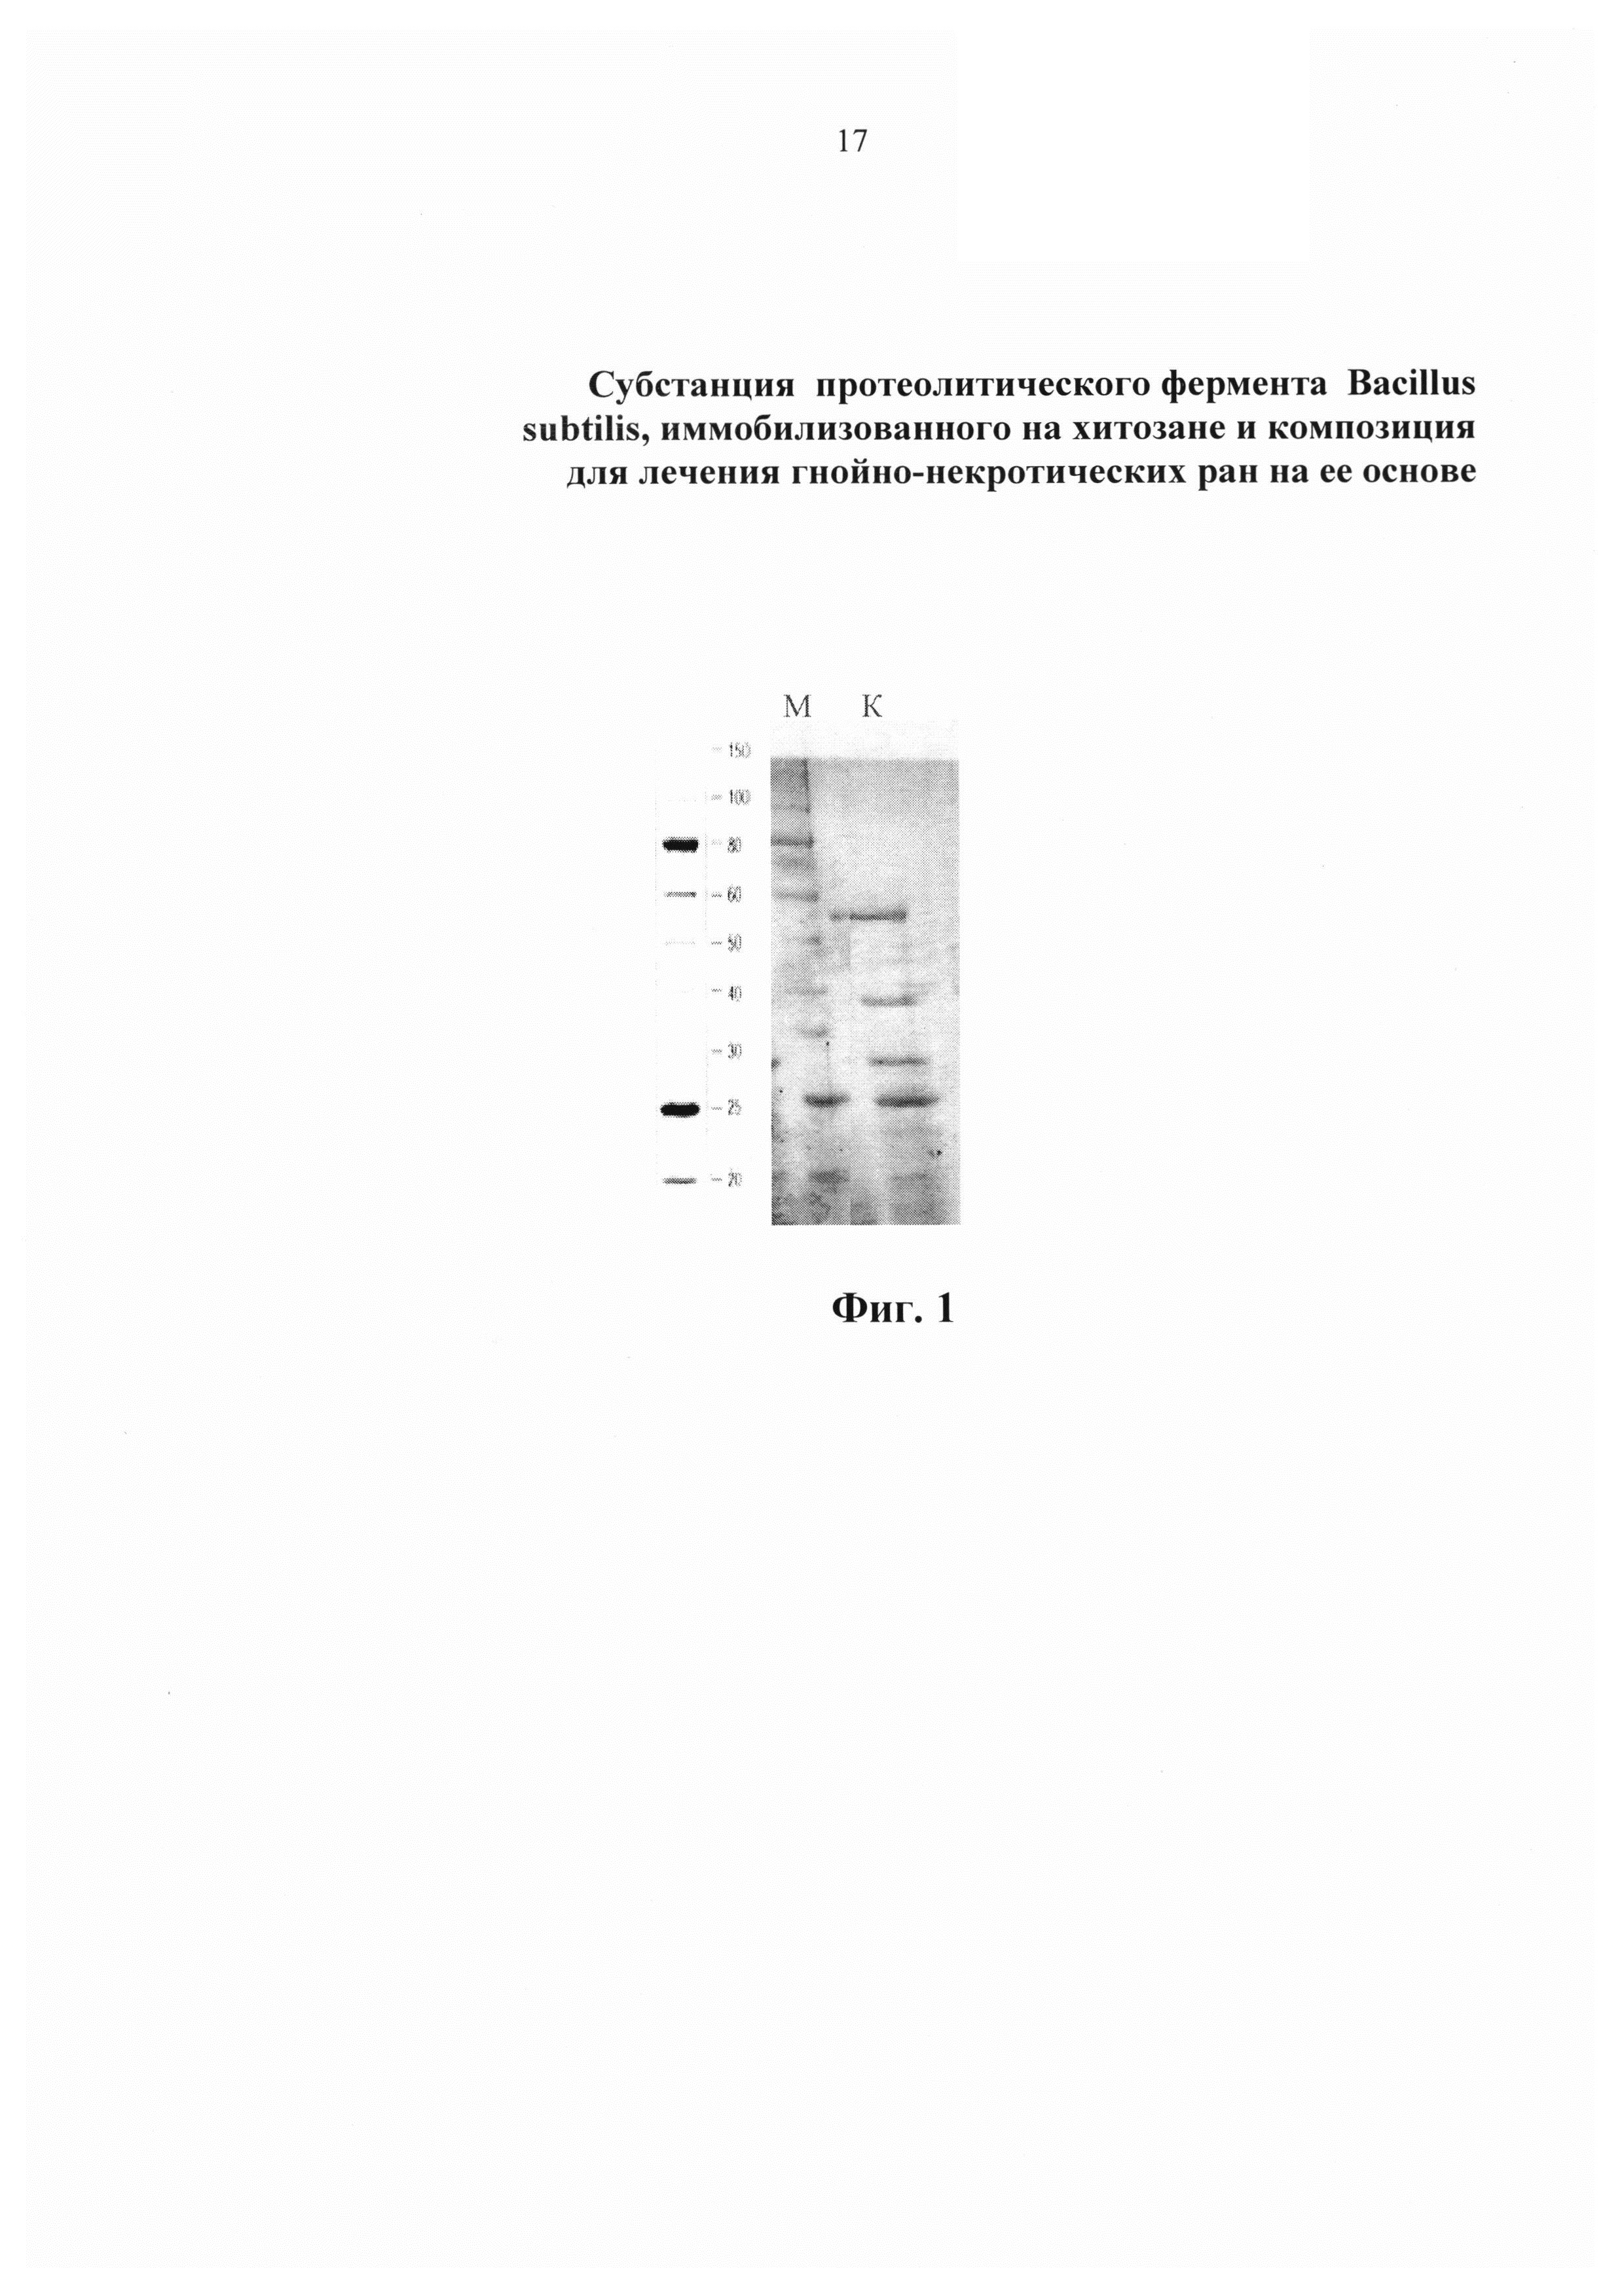 Субстанция протеолитического фермента на основе Протосубтилина ГЗХ, иммобилизованного на хитозане, и композиция для лечения гнойно-некротических ран